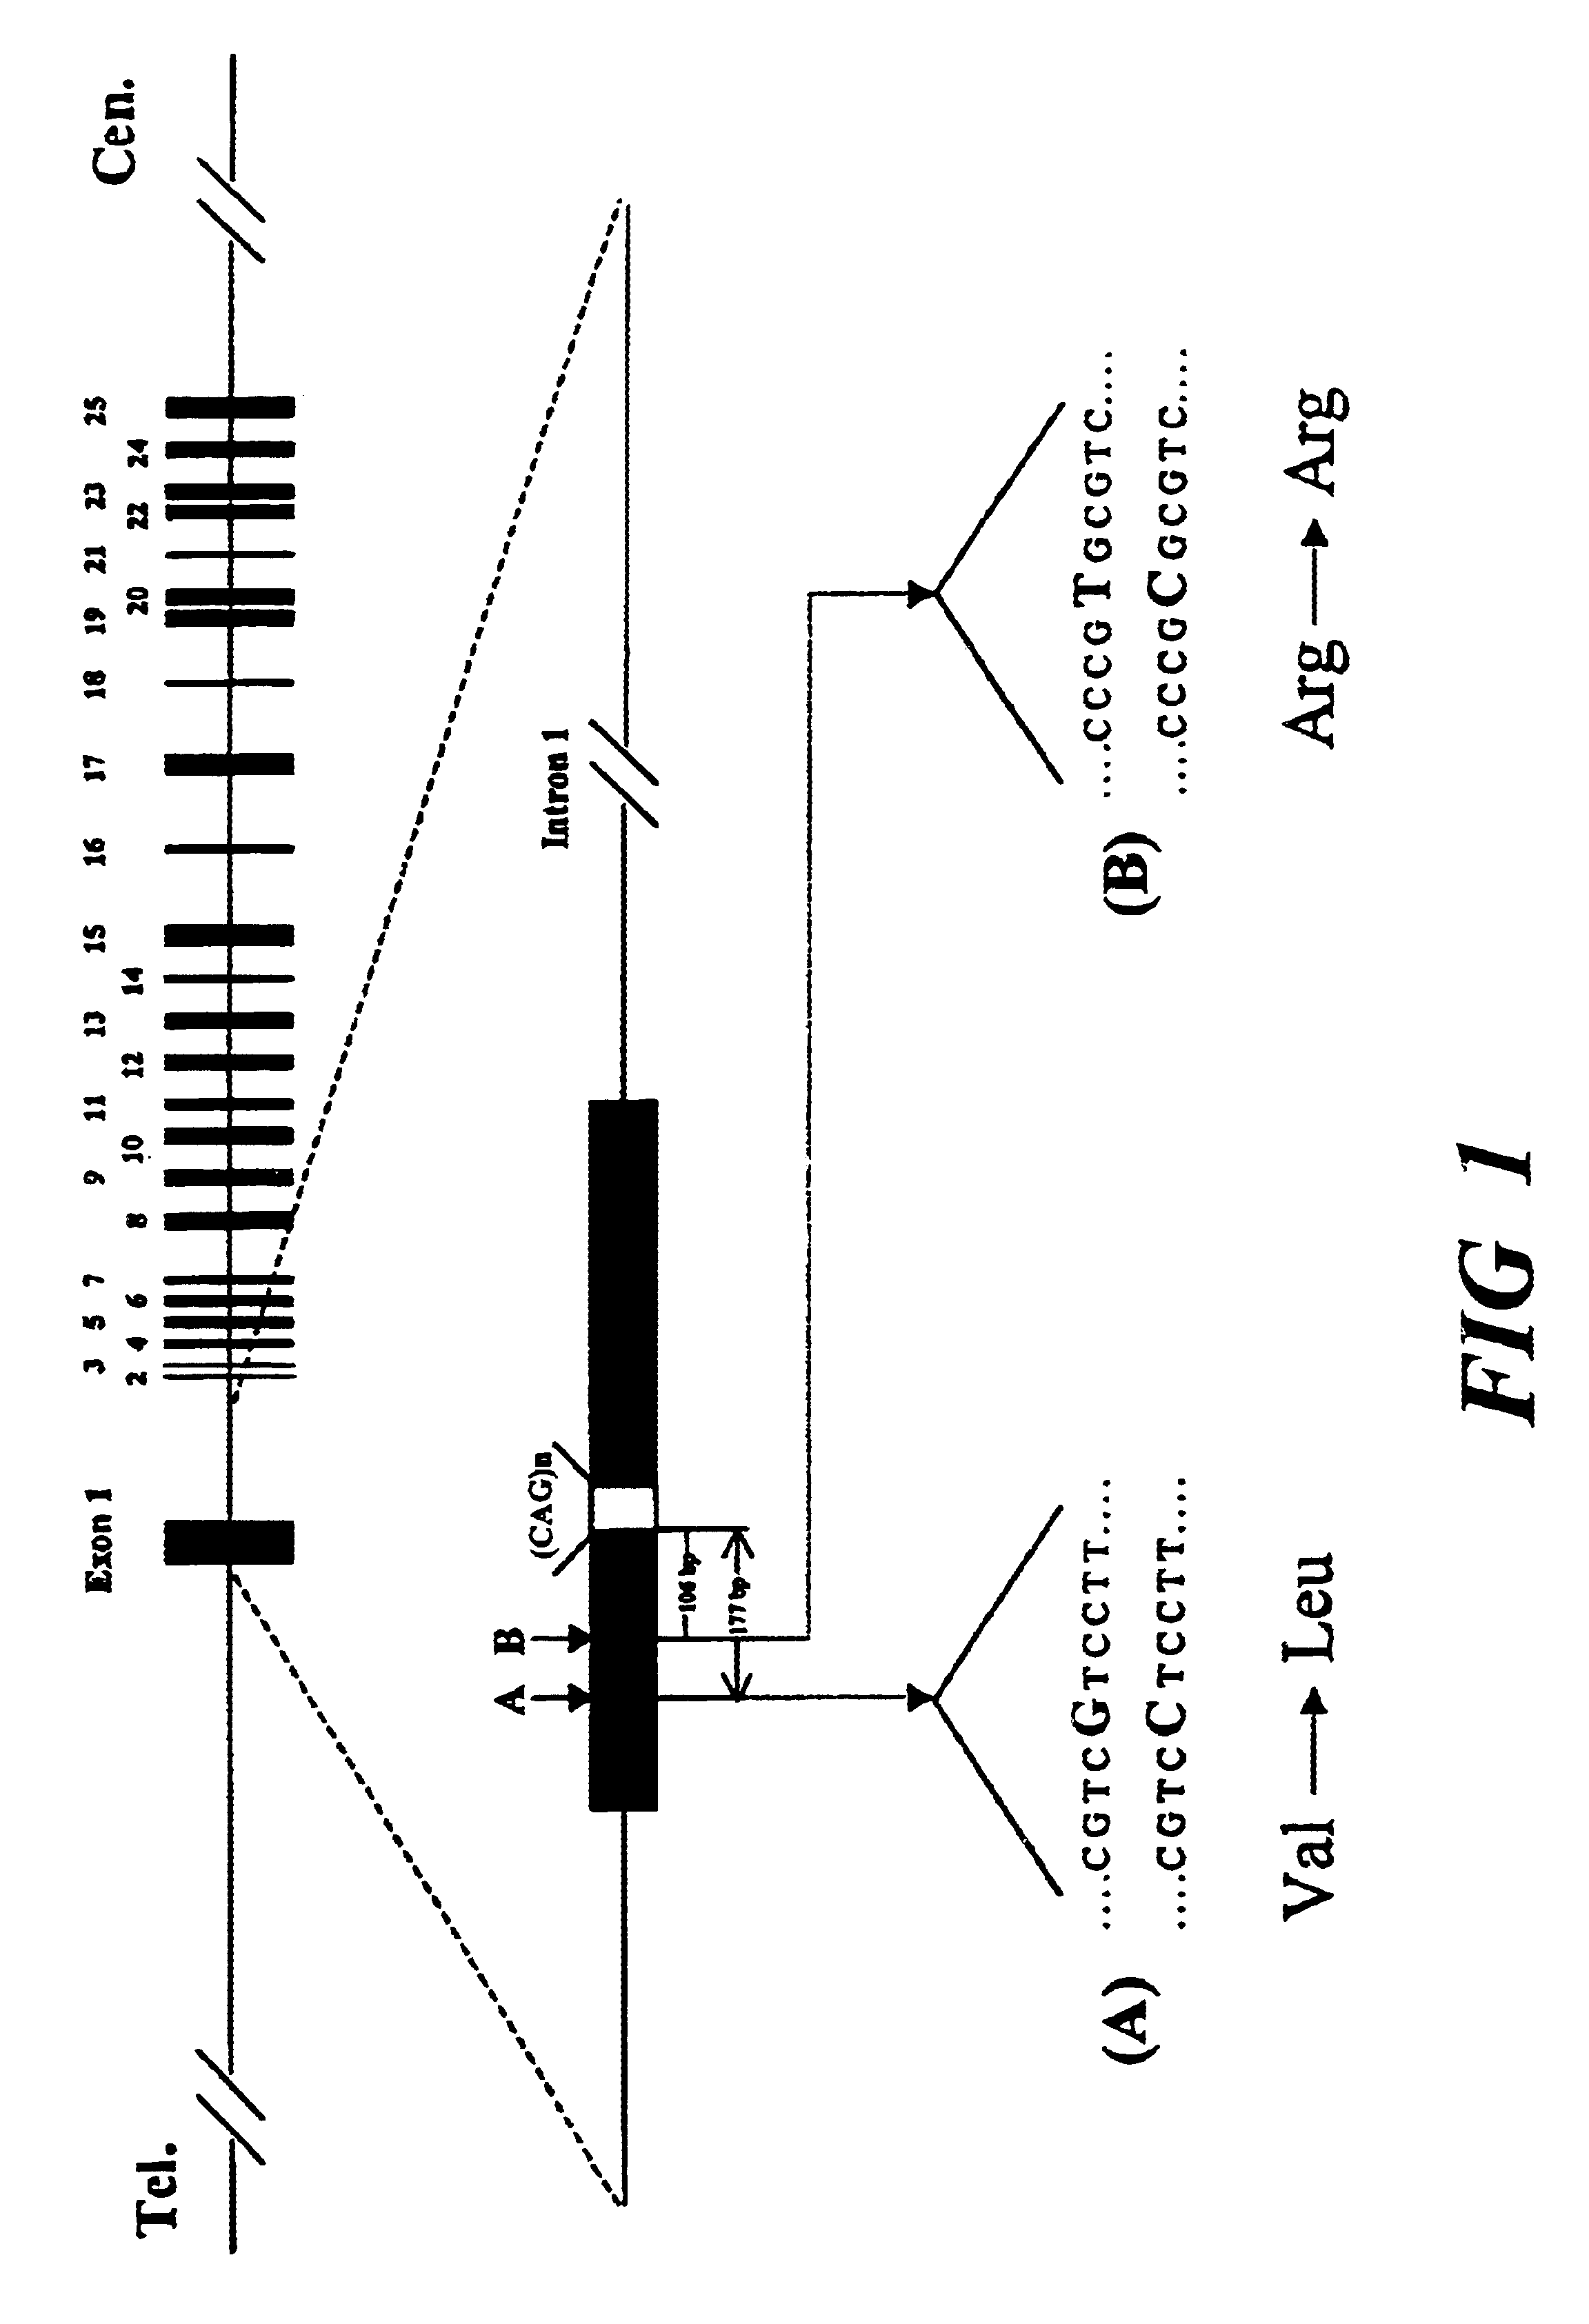 Method of detection of allelic variants of SCA2 gene